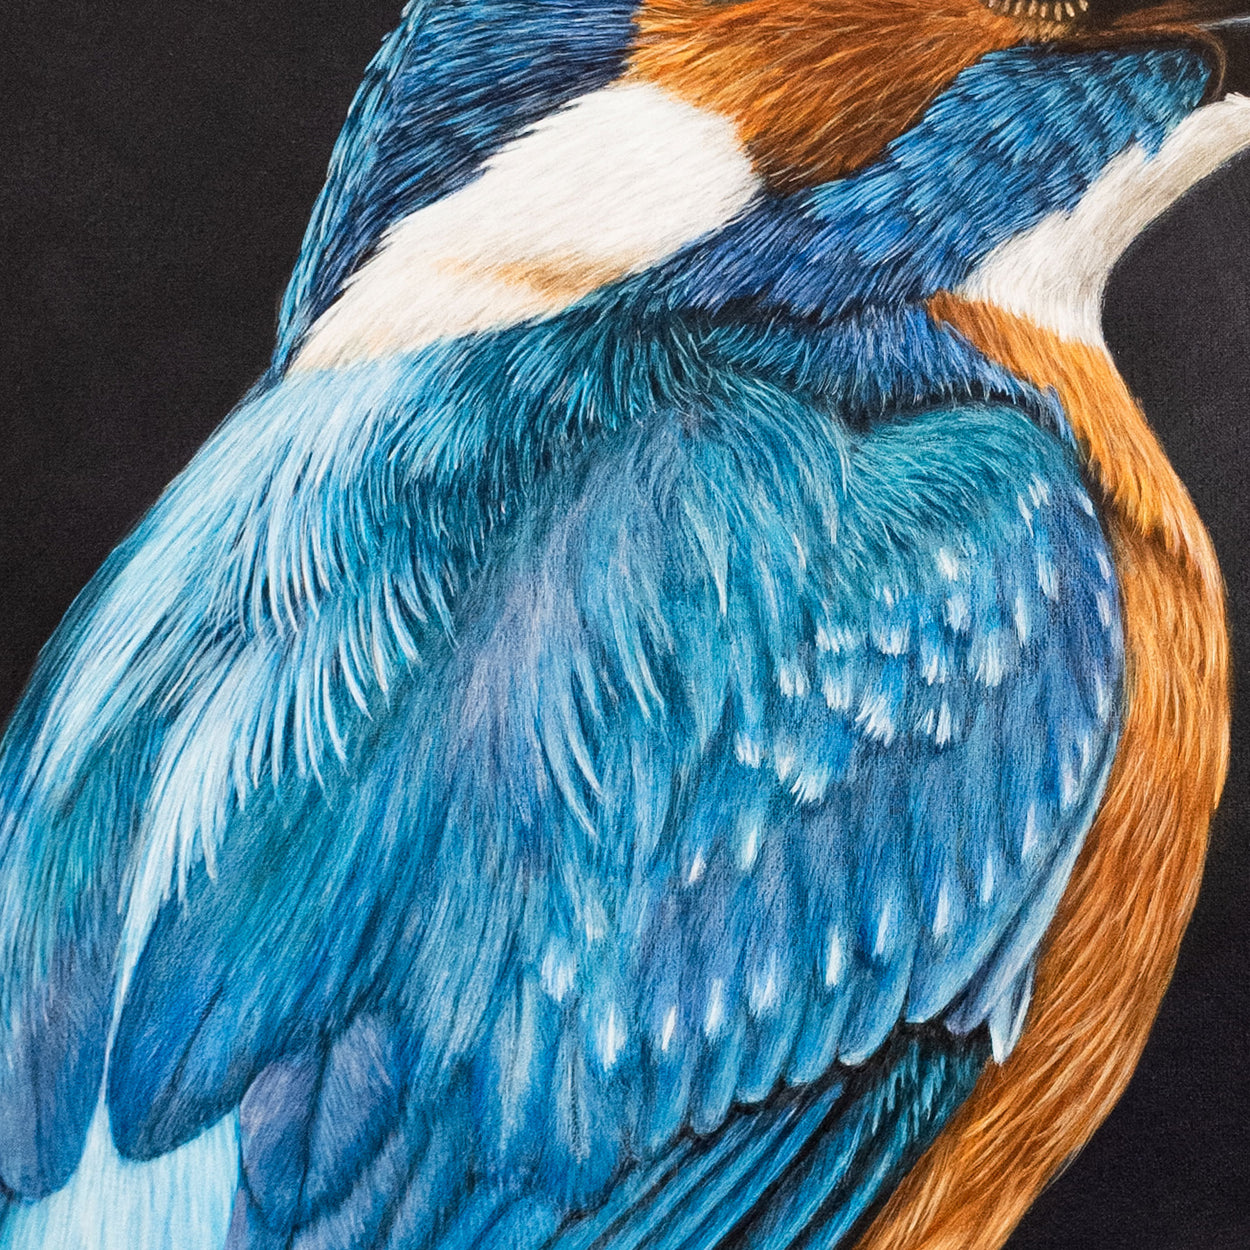 Kingfisher painting close-up 2 - Jill Dimond Bird Art